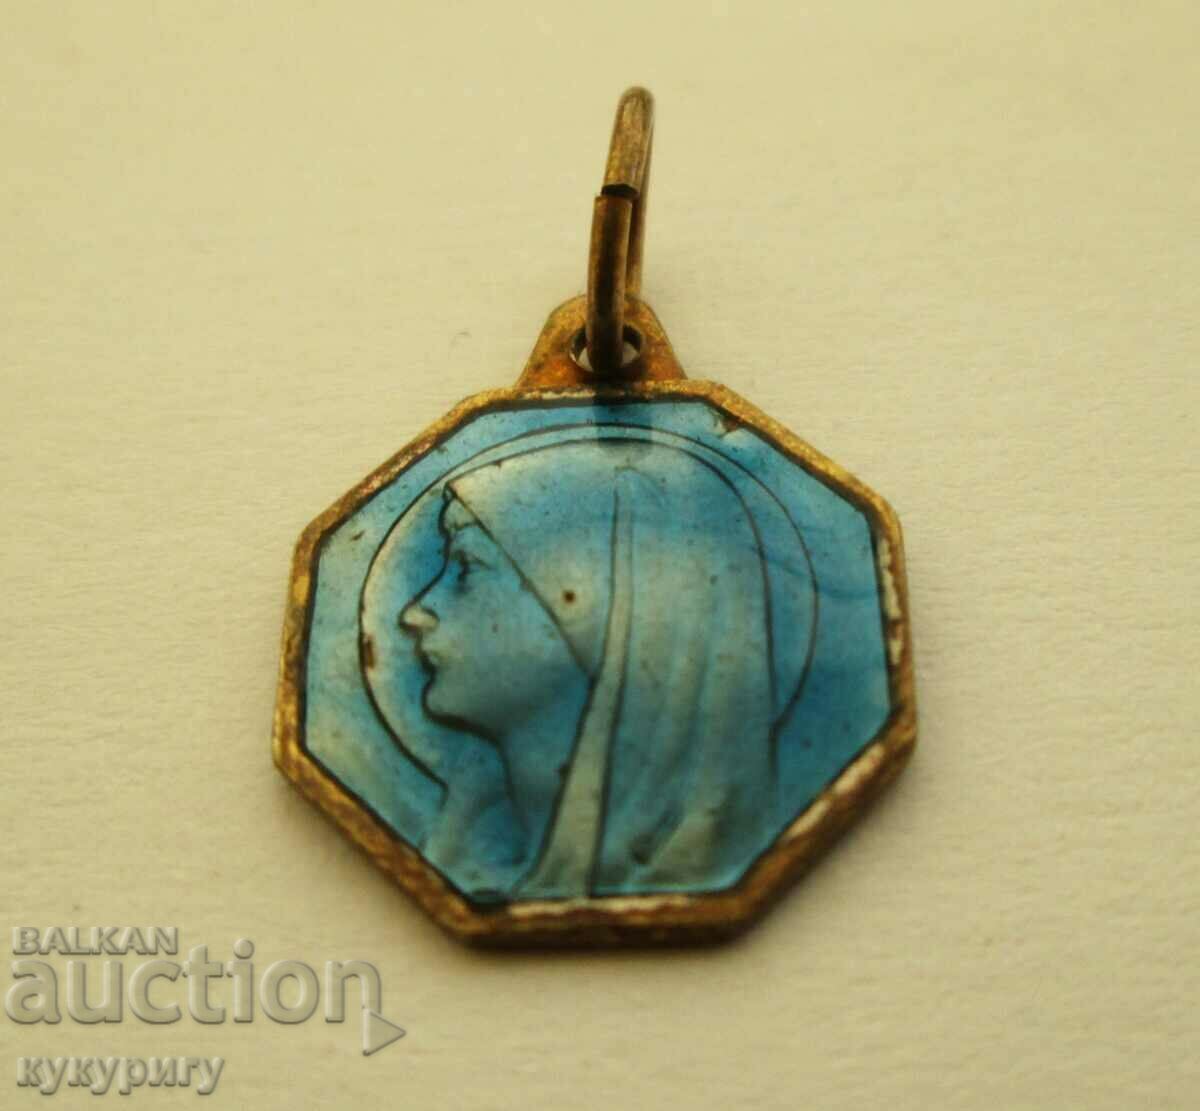 Old enamel medallion necklace pendant icon Virgin Mary